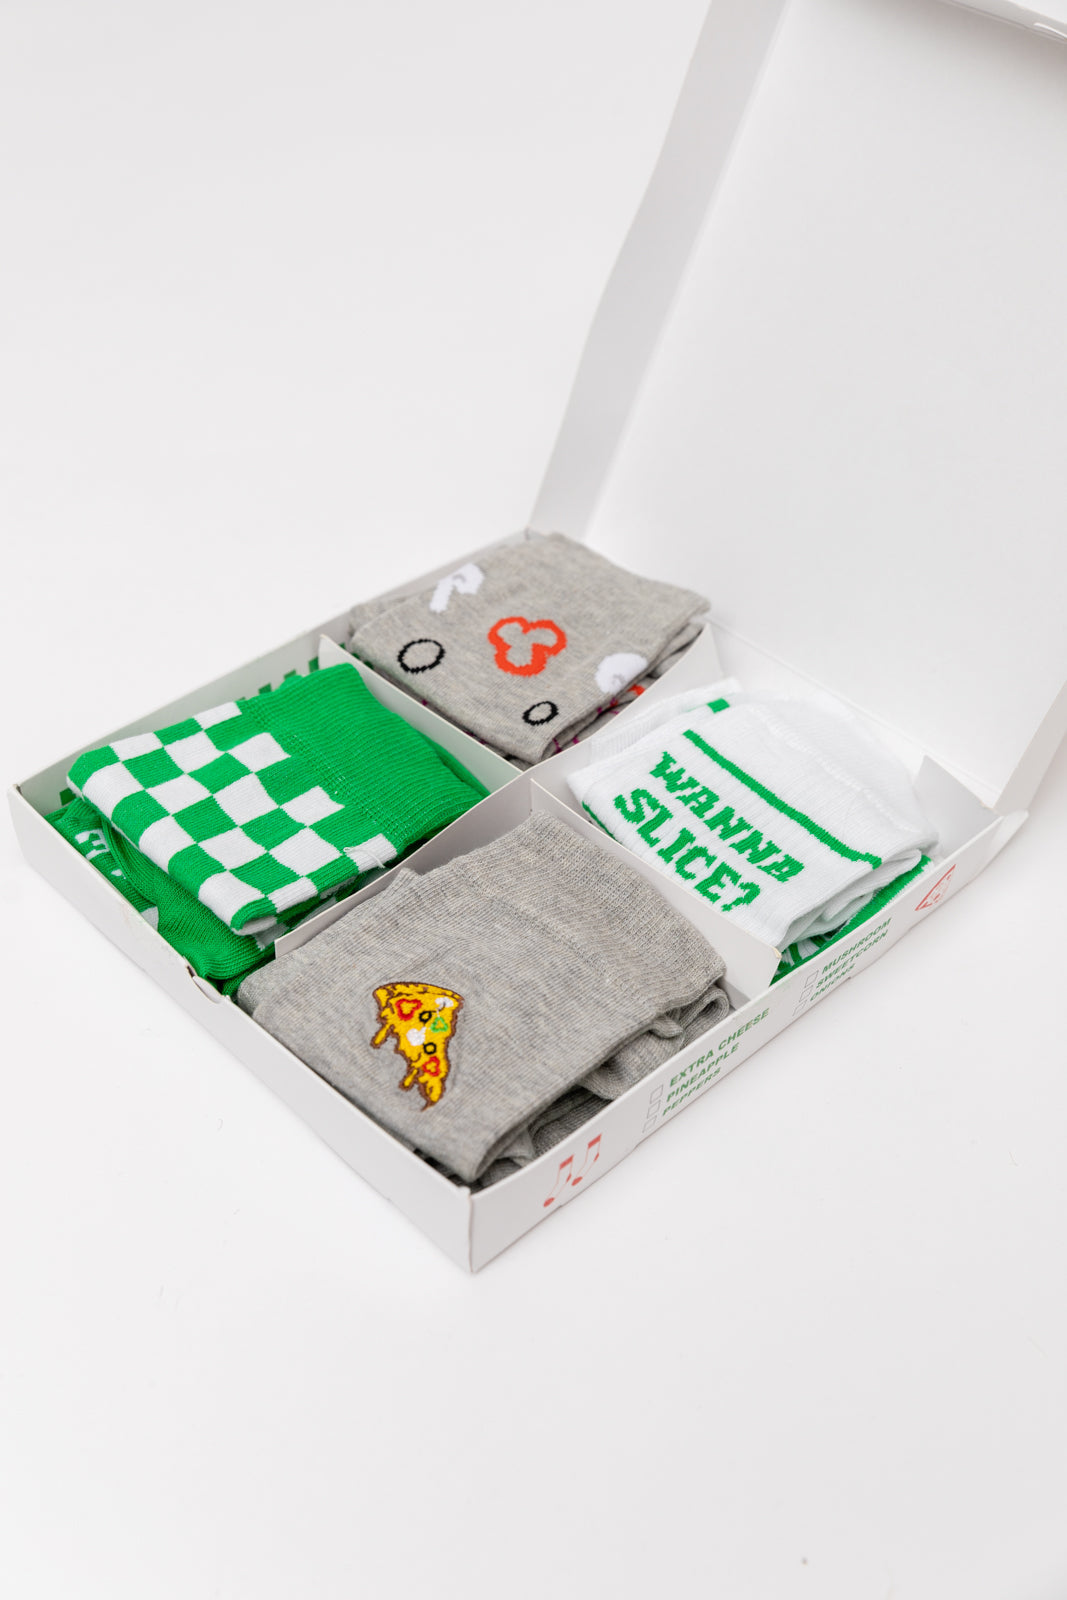 Veggie Pizza Sock Set - OS - Womens